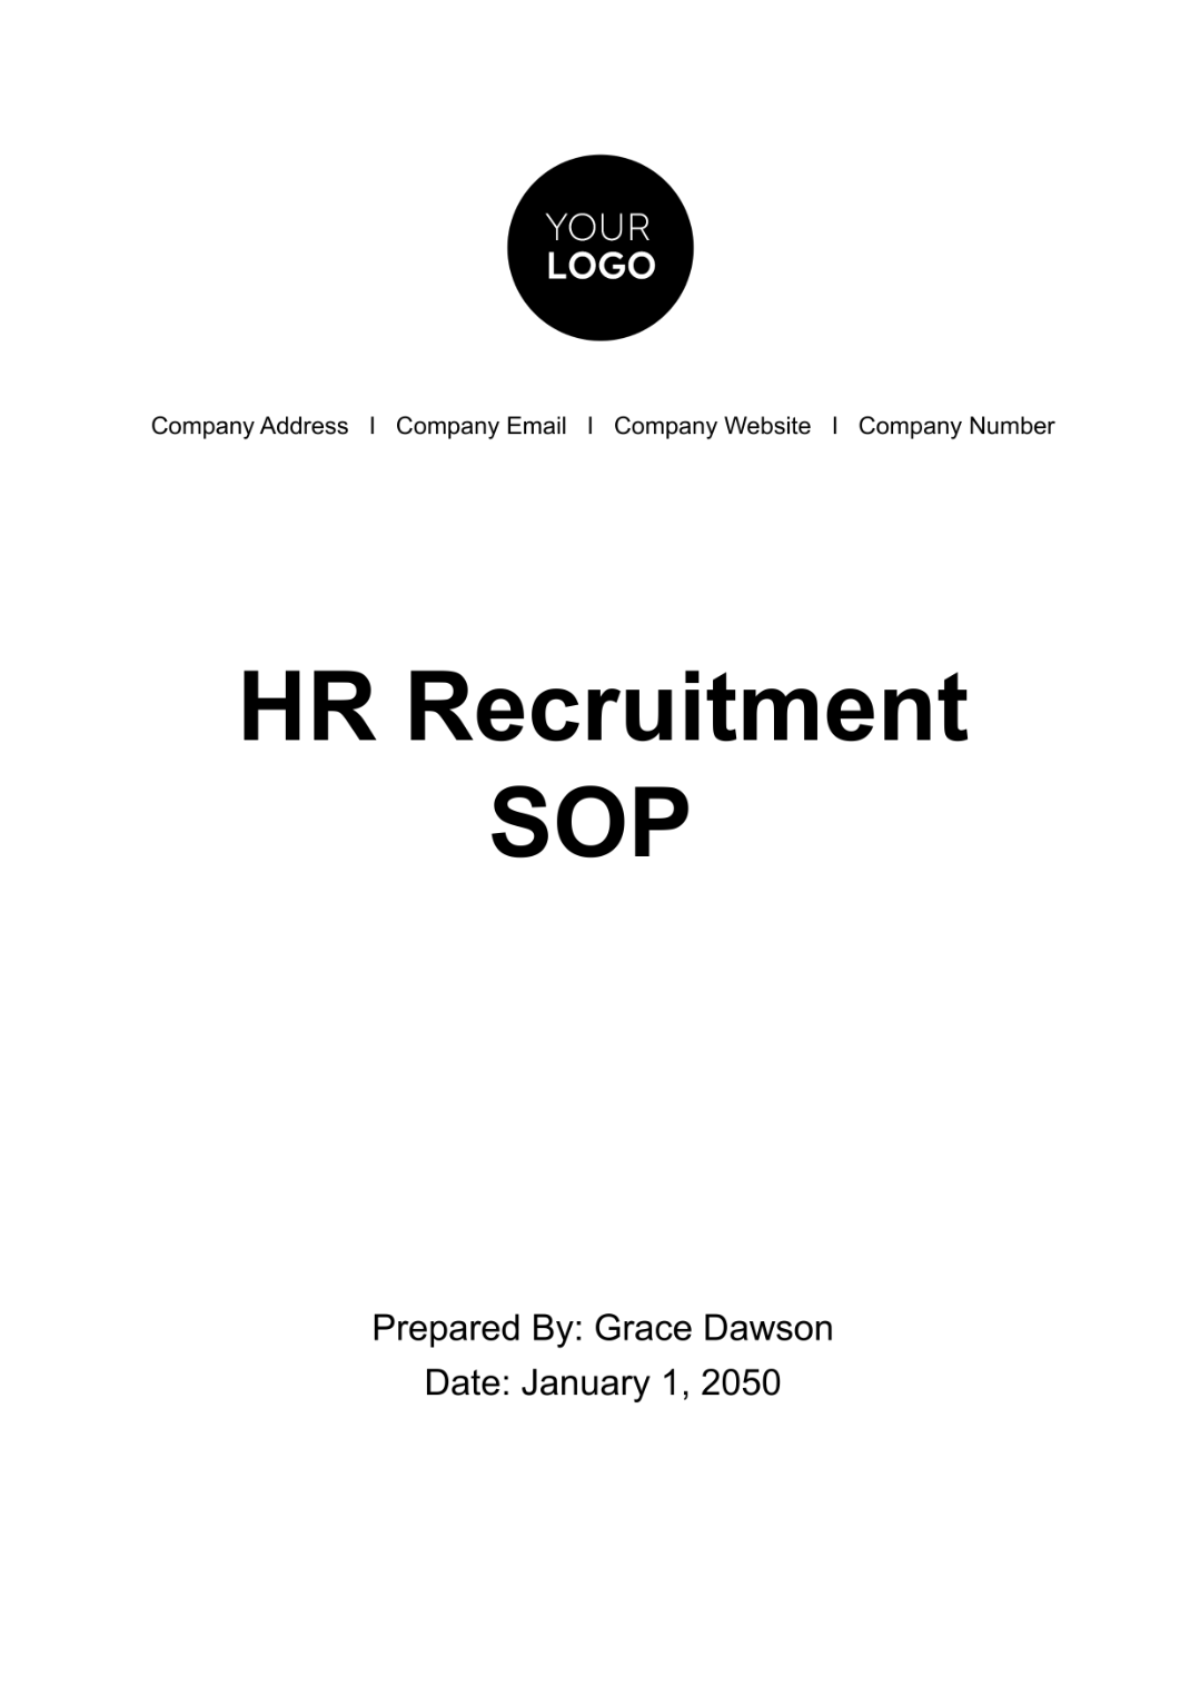 Free Recruitment SOP HR Template